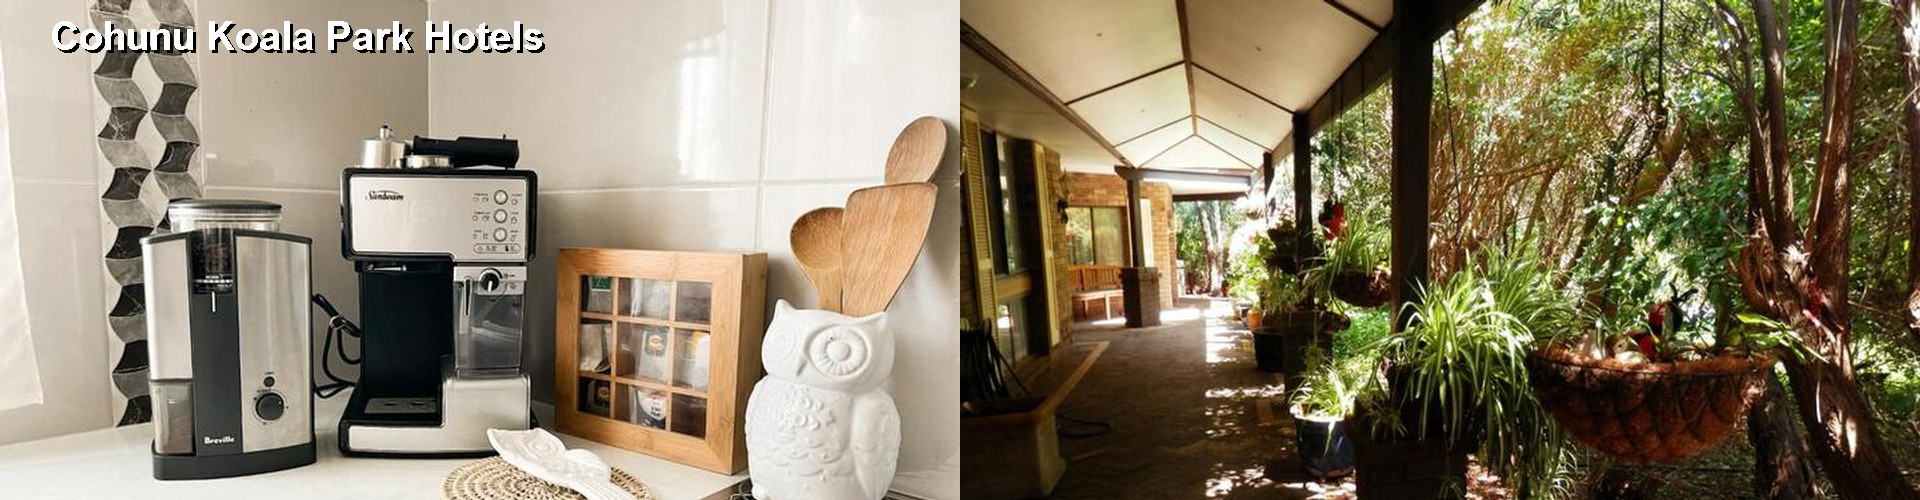 5 Best Hotels near Cohunu Koala Park